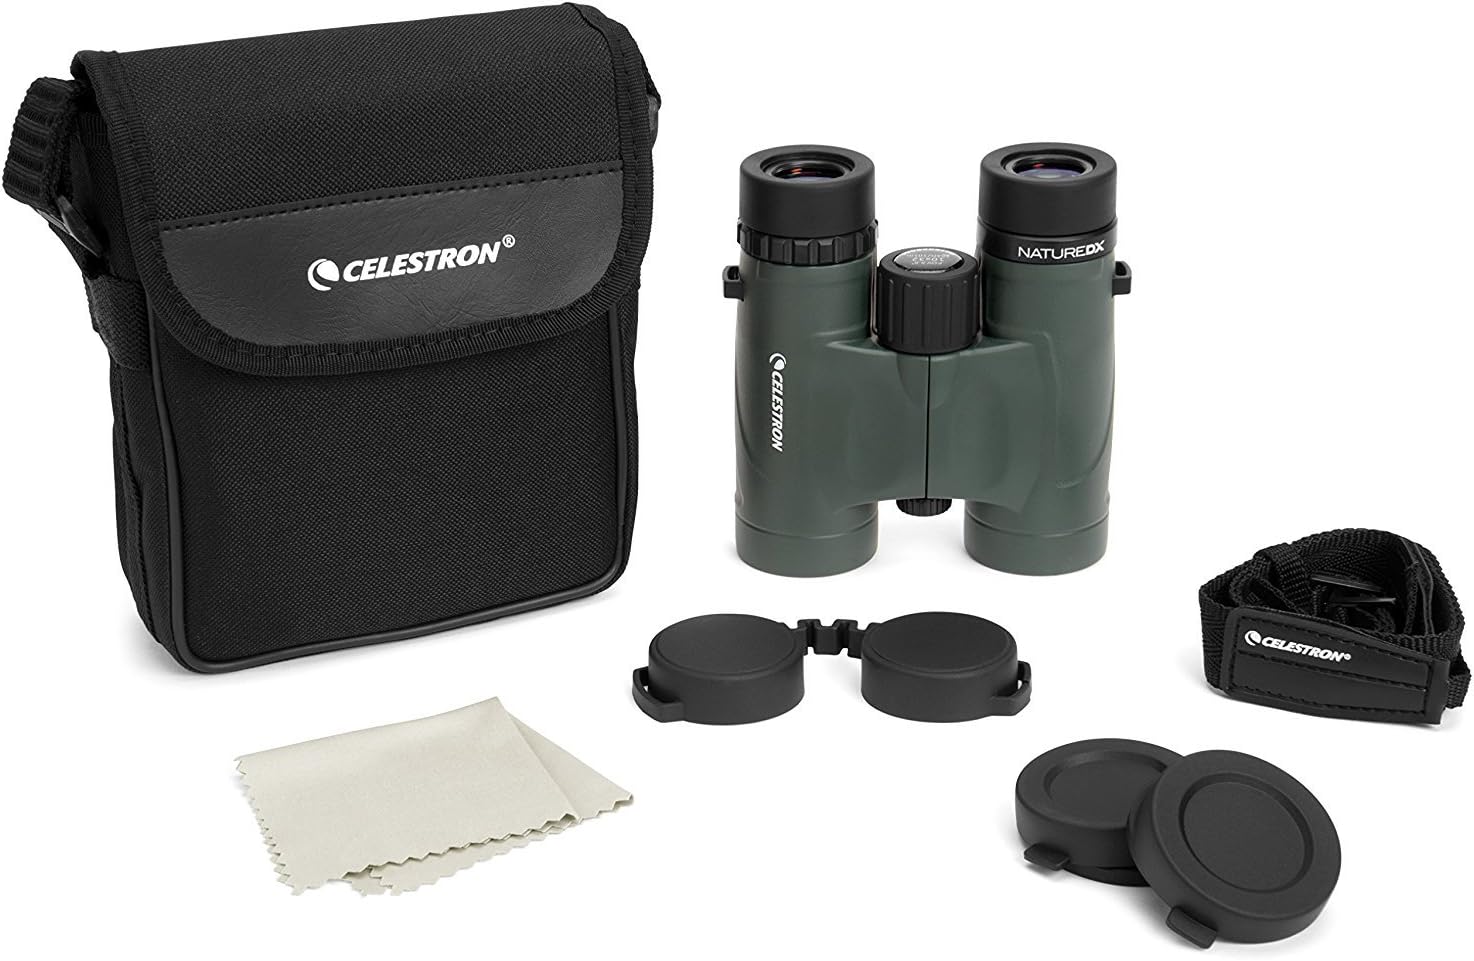 Celestron – Nature DX 8x32 Binoculars – Outdoor and Birding Binocular